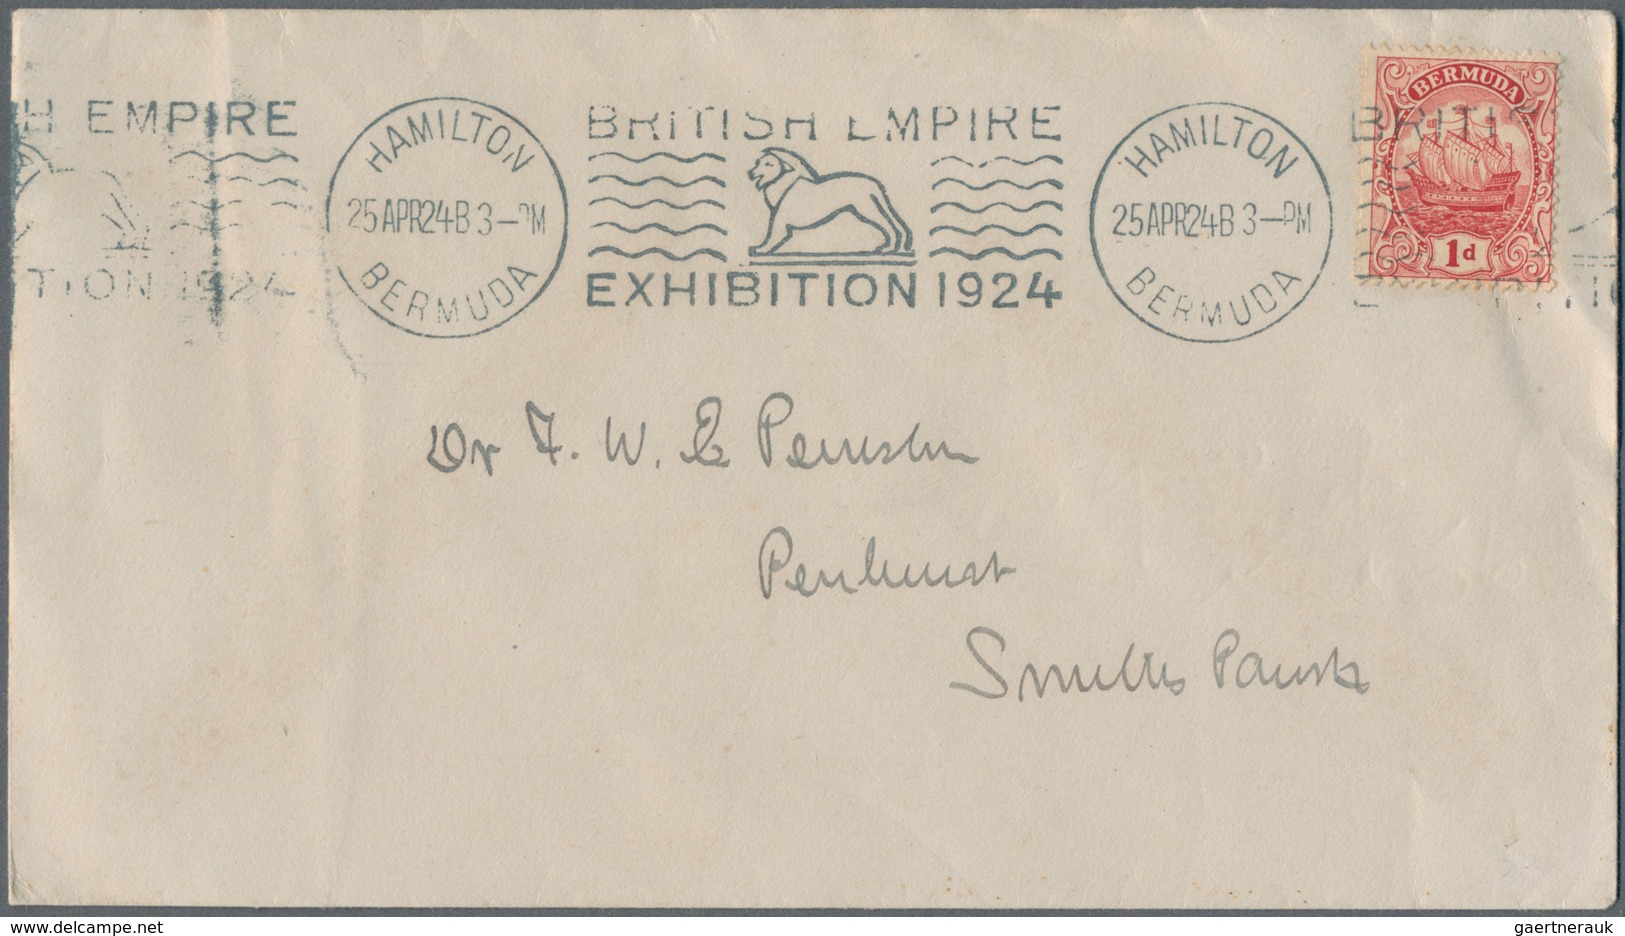 Bermuda-Inseln: 1880/1980 ca. 140 unused/CTO-used and used postal stationeries (unfolded and used wr